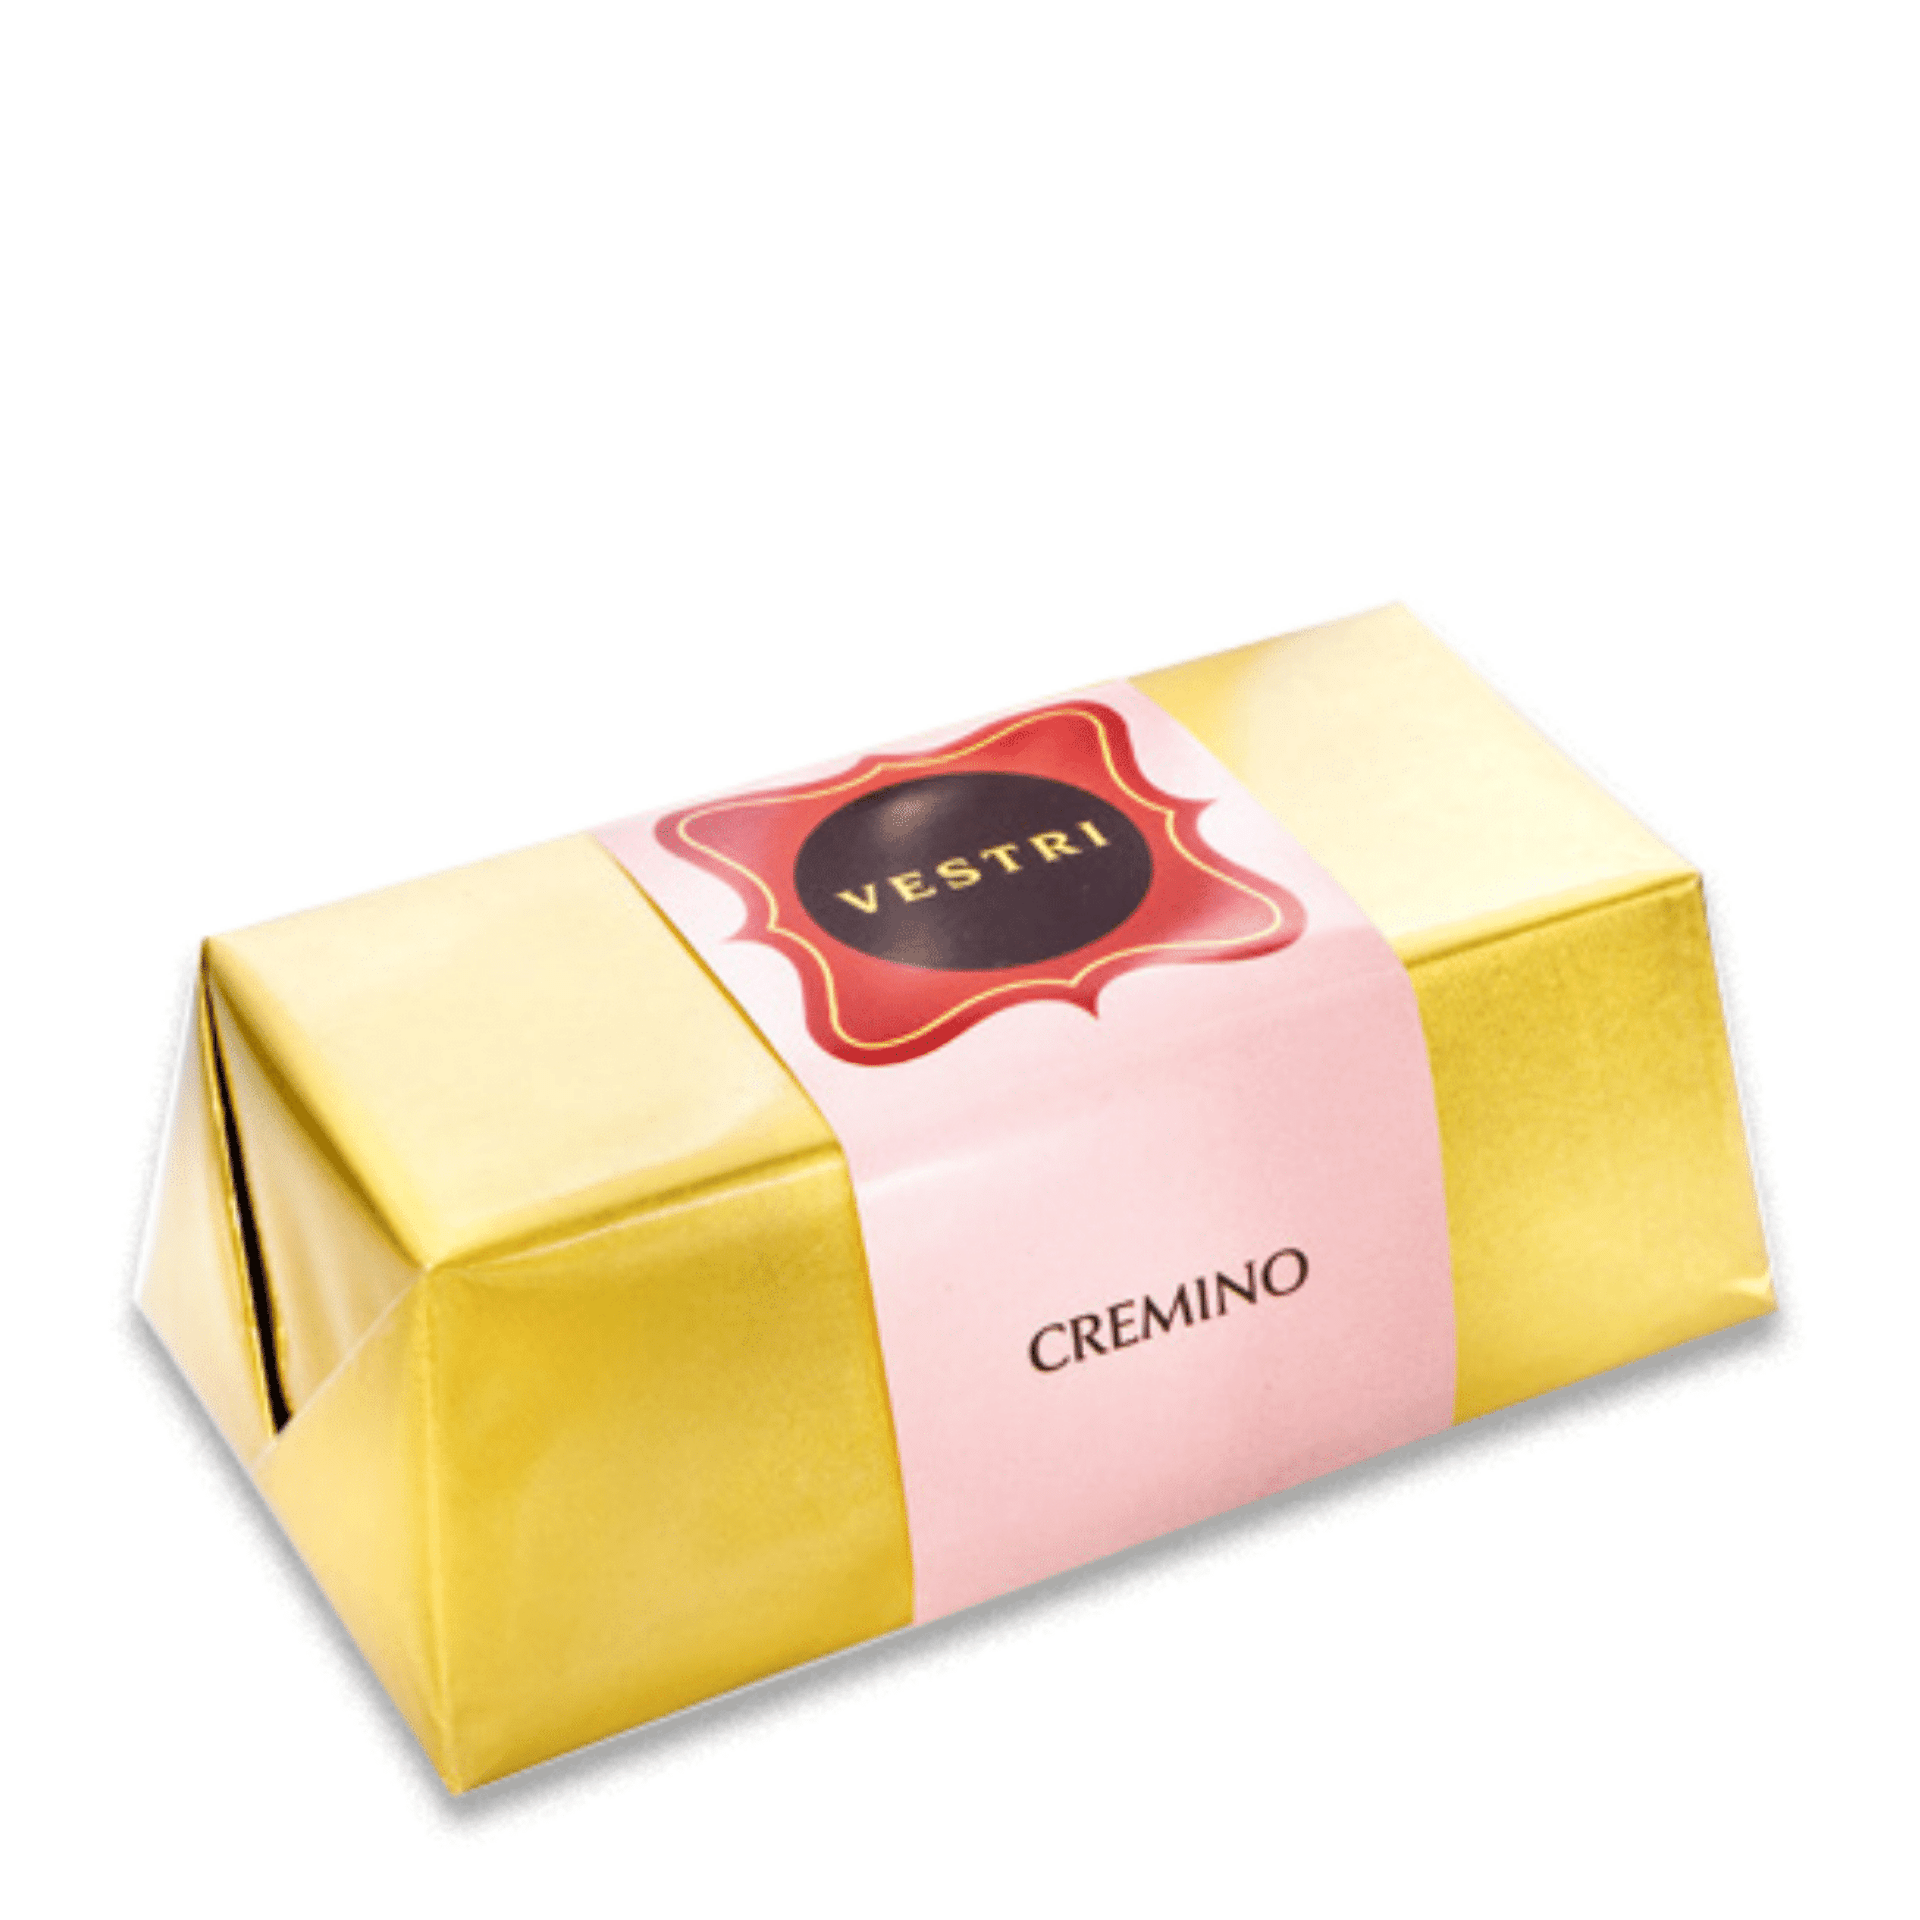 Tasty Ribbon Chocolate Triumph BC Gift | Gourmet Italian Gift Boxes | Tasty Ribbon